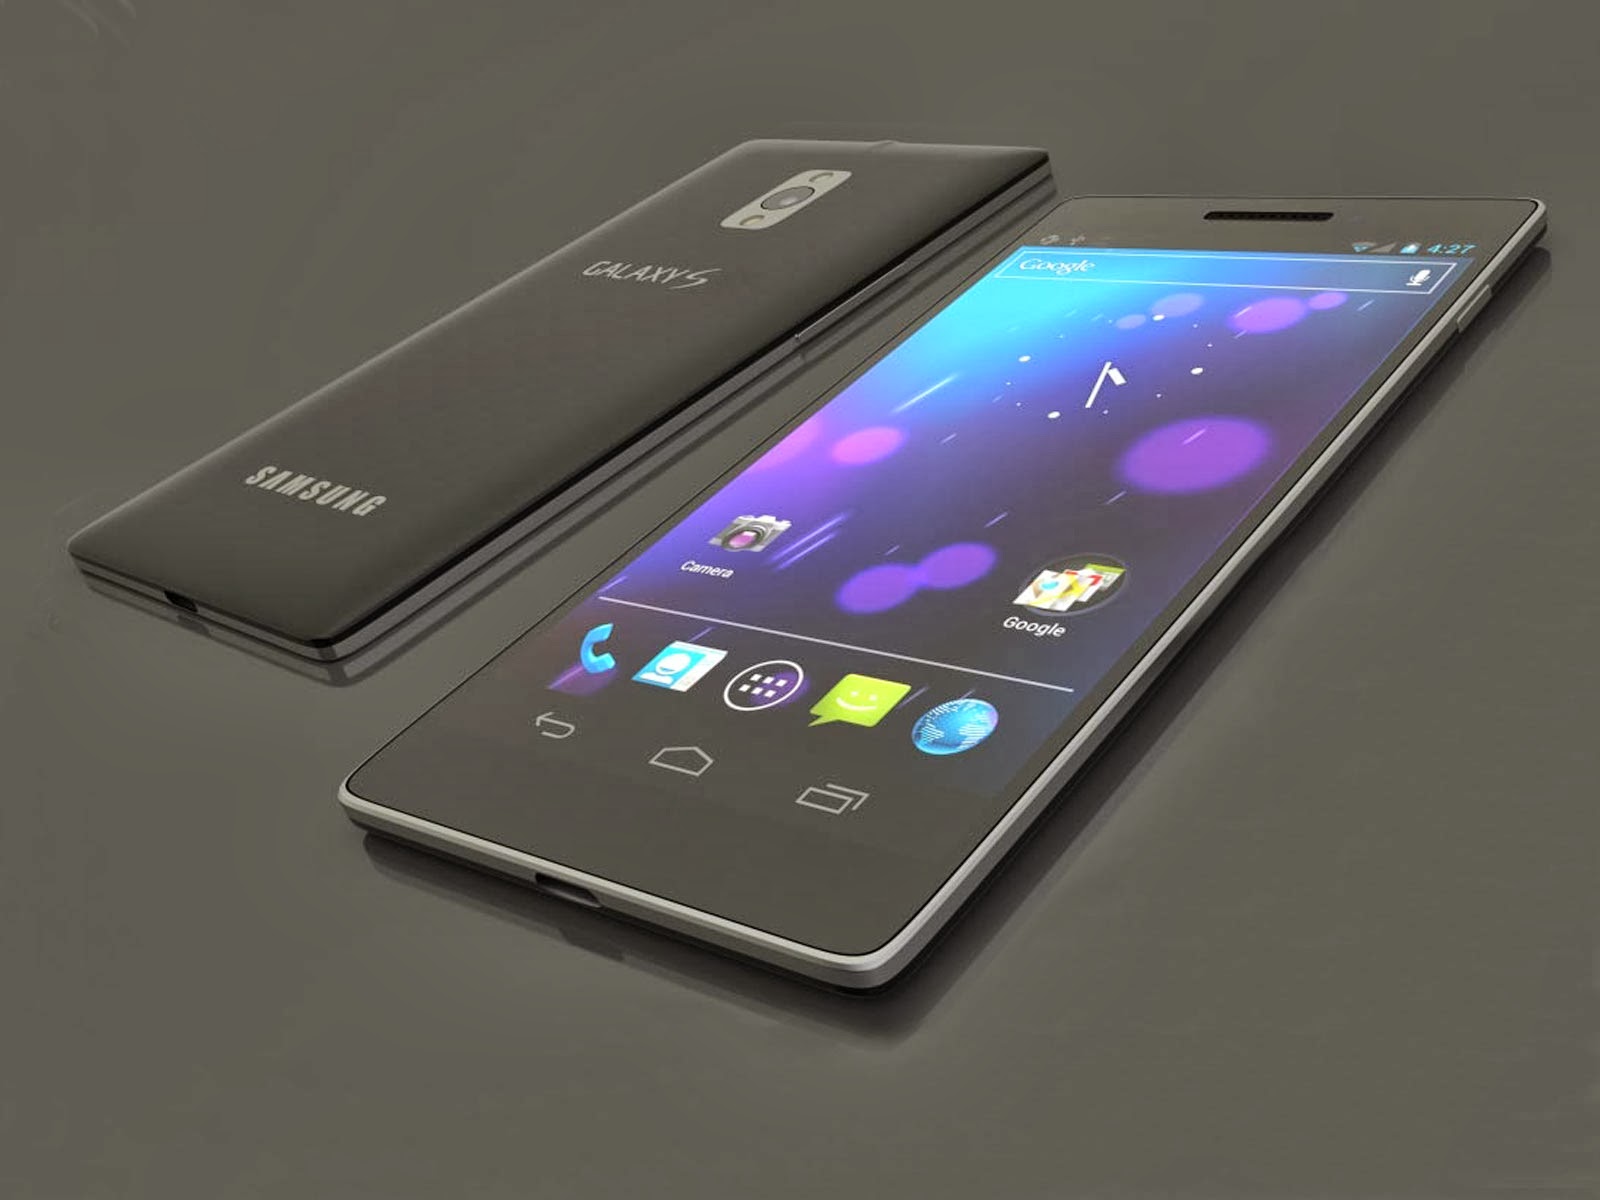 Harga Hp Samsung Galaxy Terbaru 2014